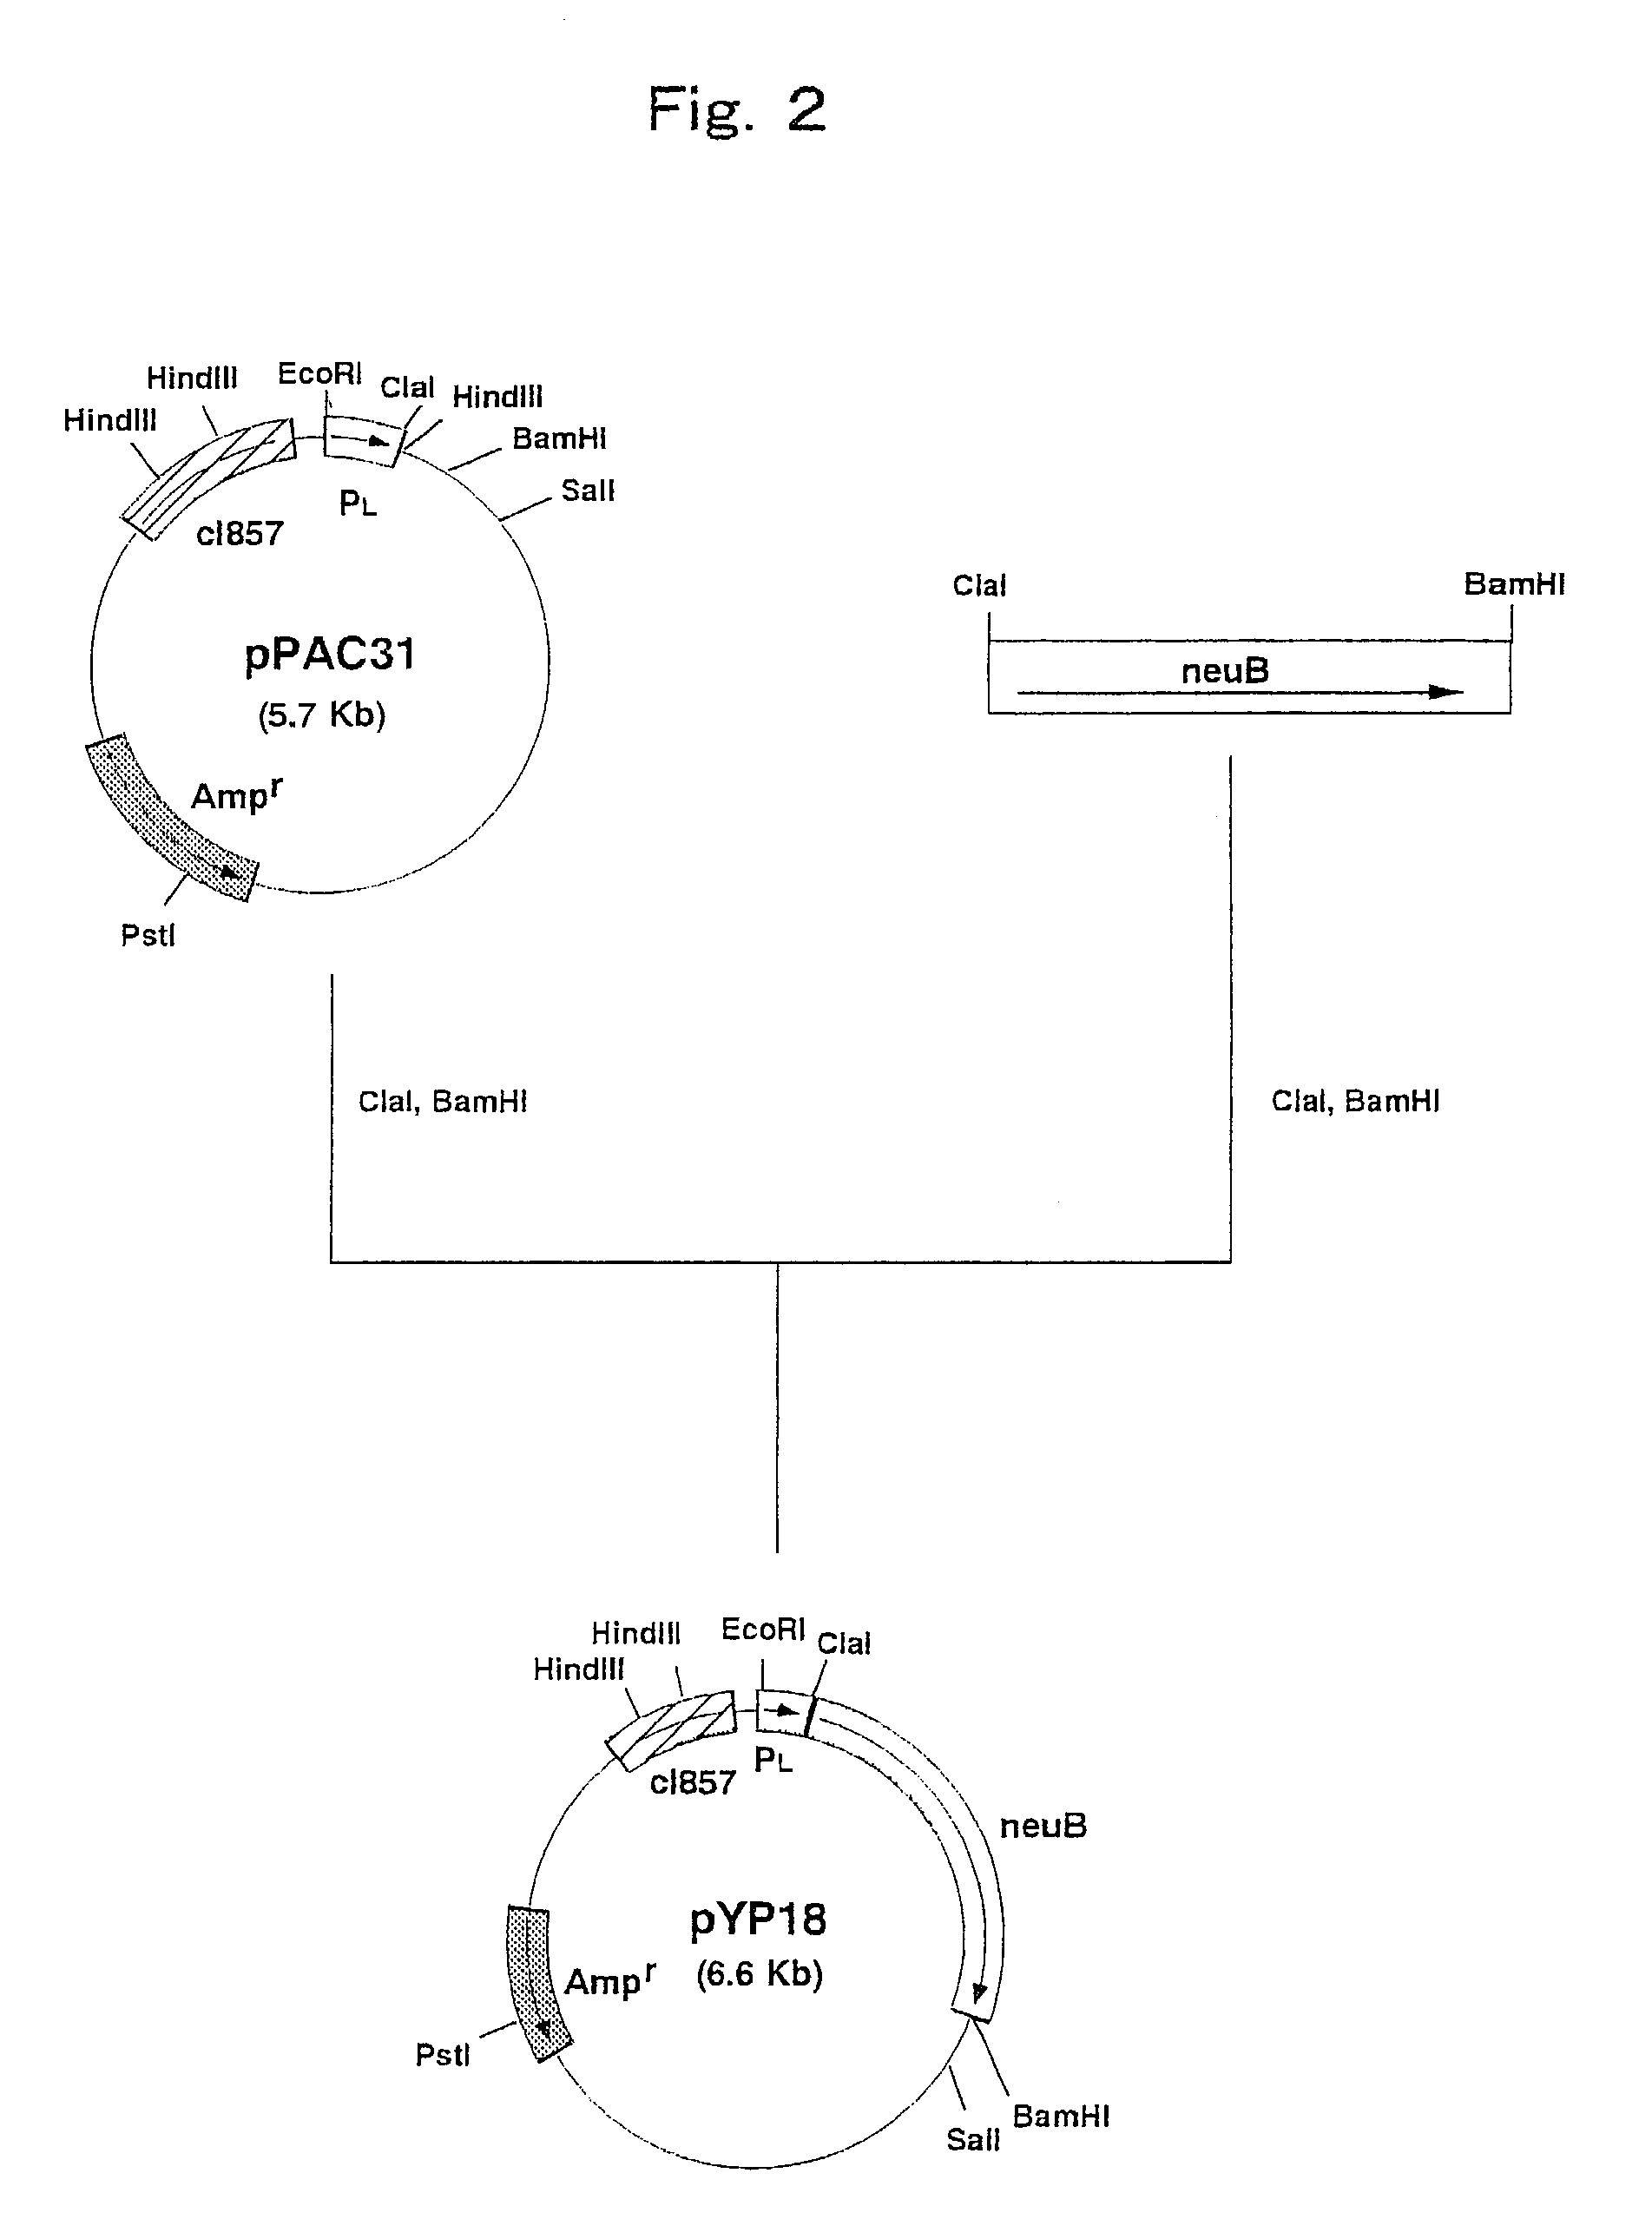 Process for producing N-acetylneuraminic acid